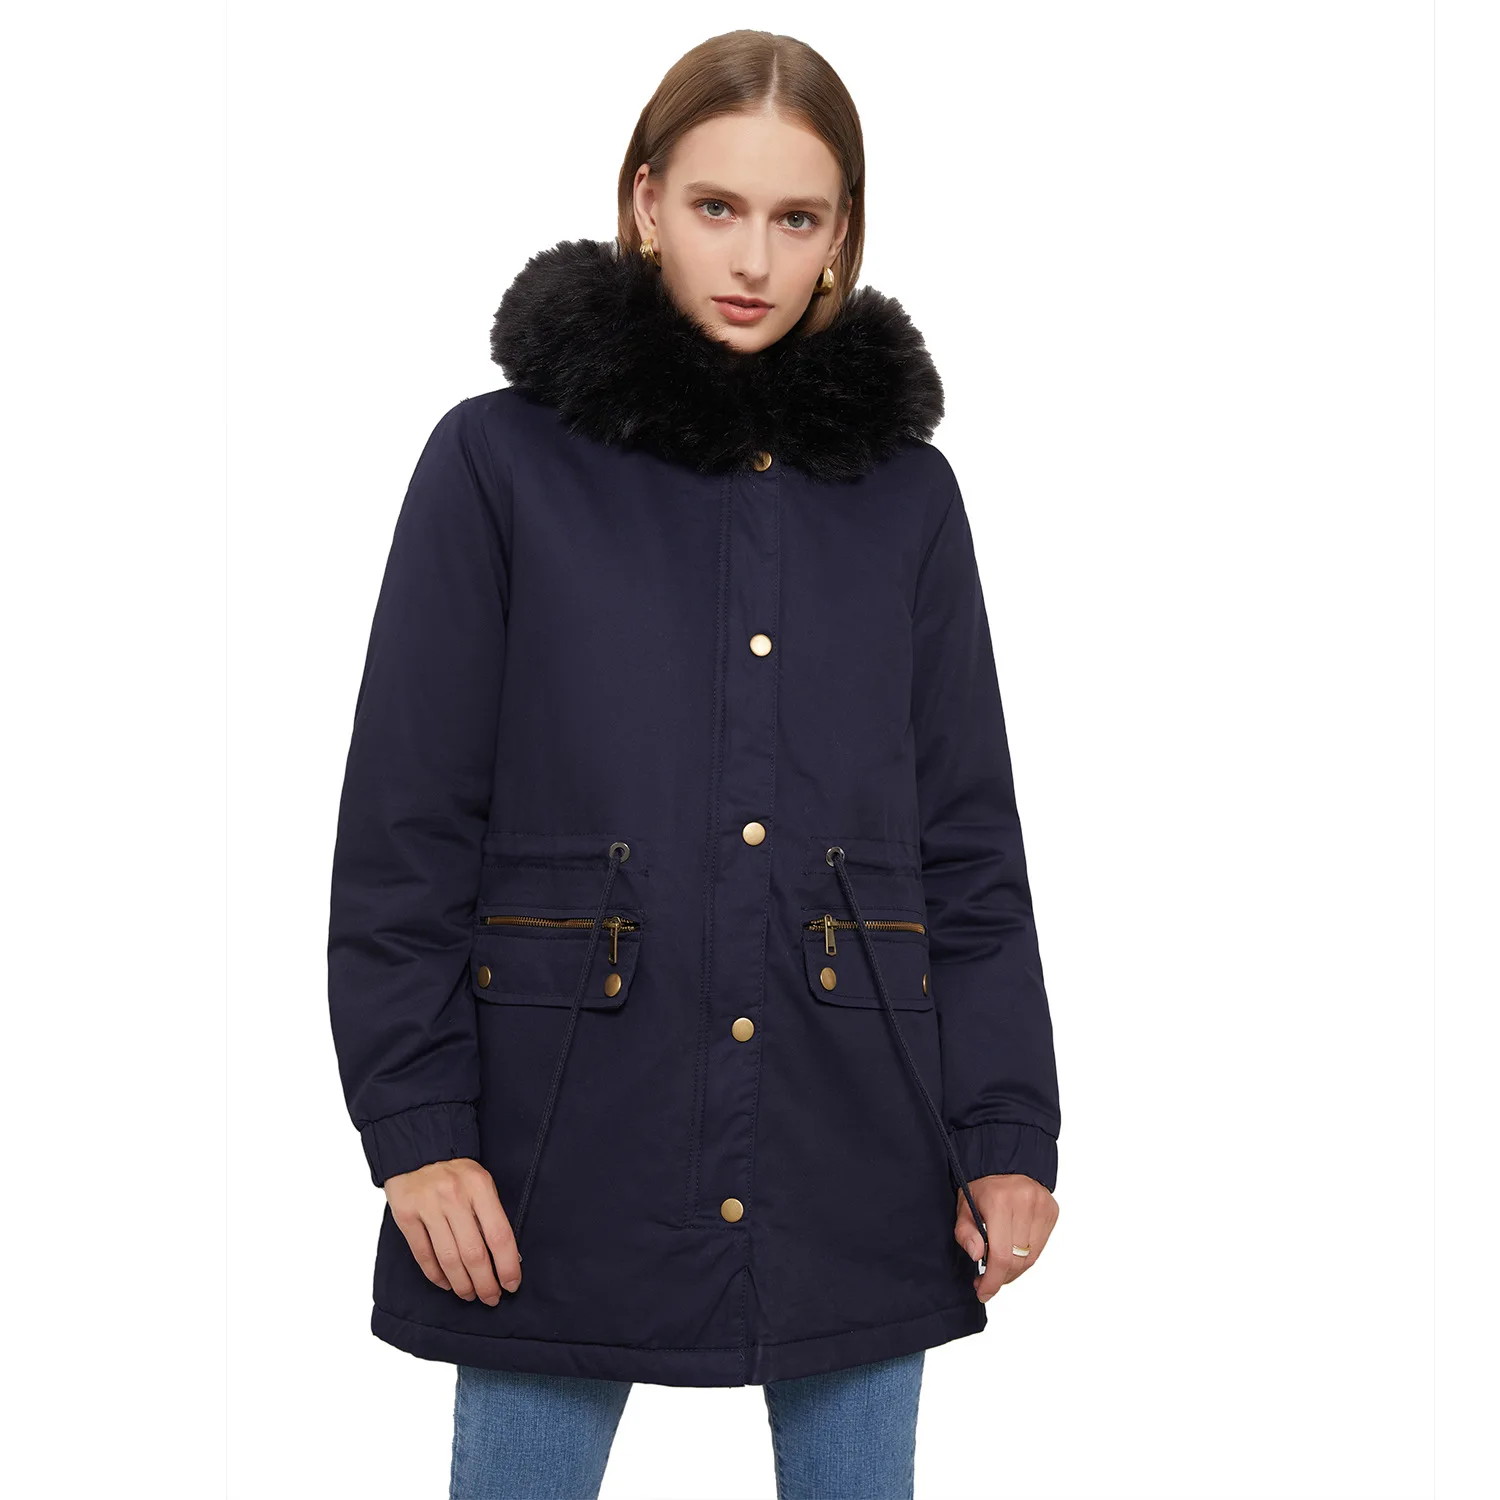 

PULABO Autumn Winter Parka Coat Women Velvet Cotton Jacket With Faux Fur Collar Hooded Warm Outerwear Loose Cotton Coat